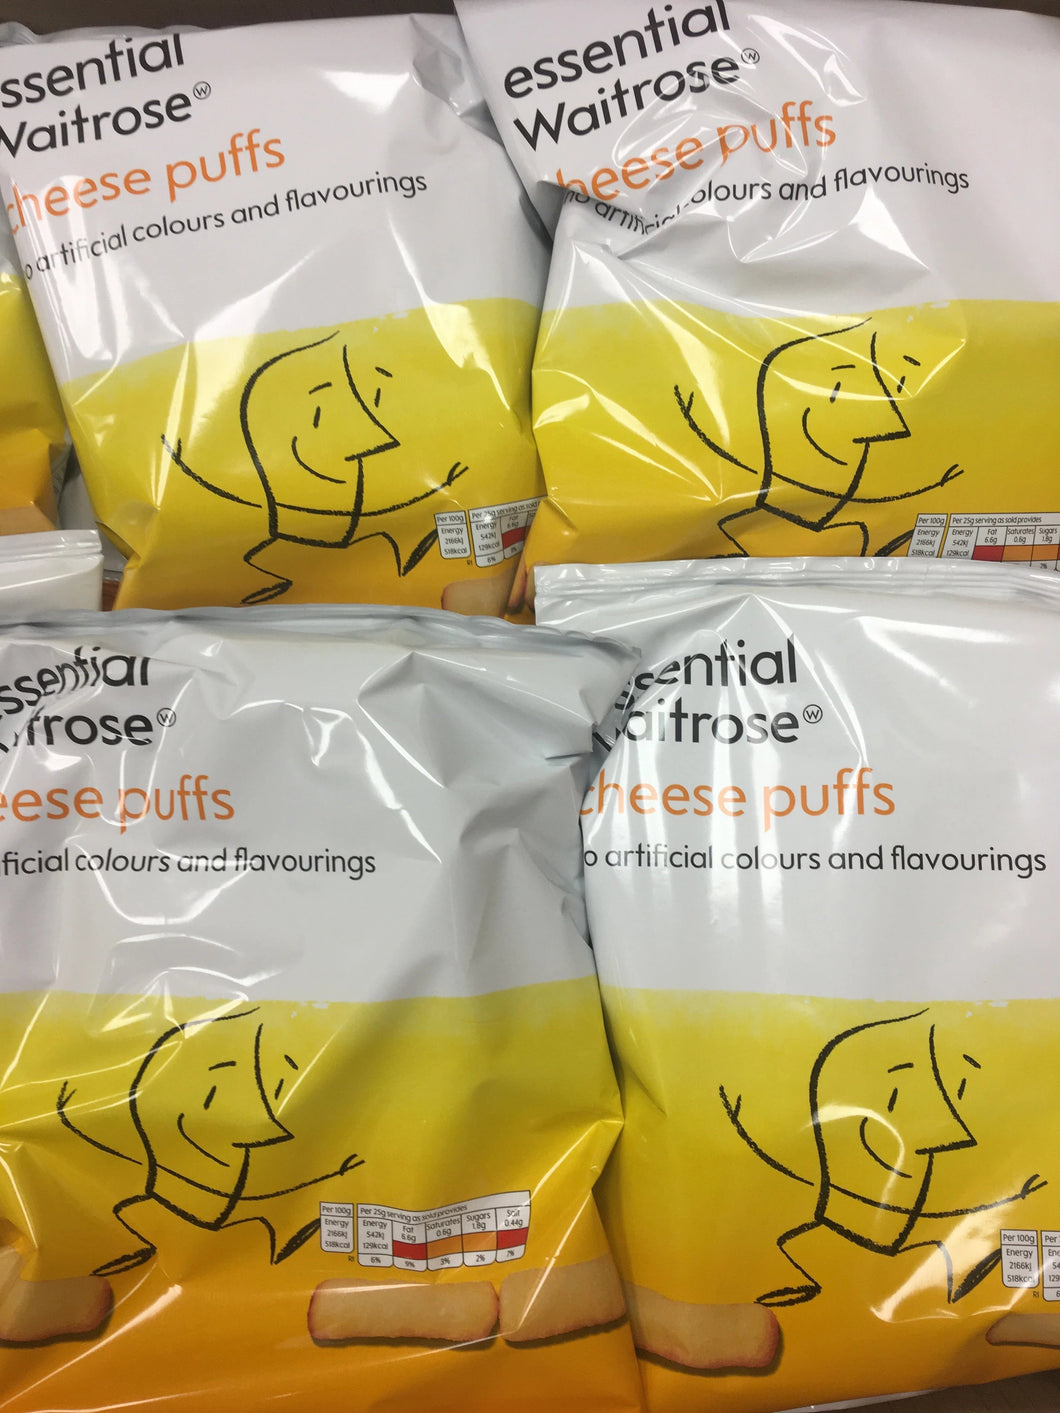 12x Packets of Waitrose Cheese Puffs (12x100g)